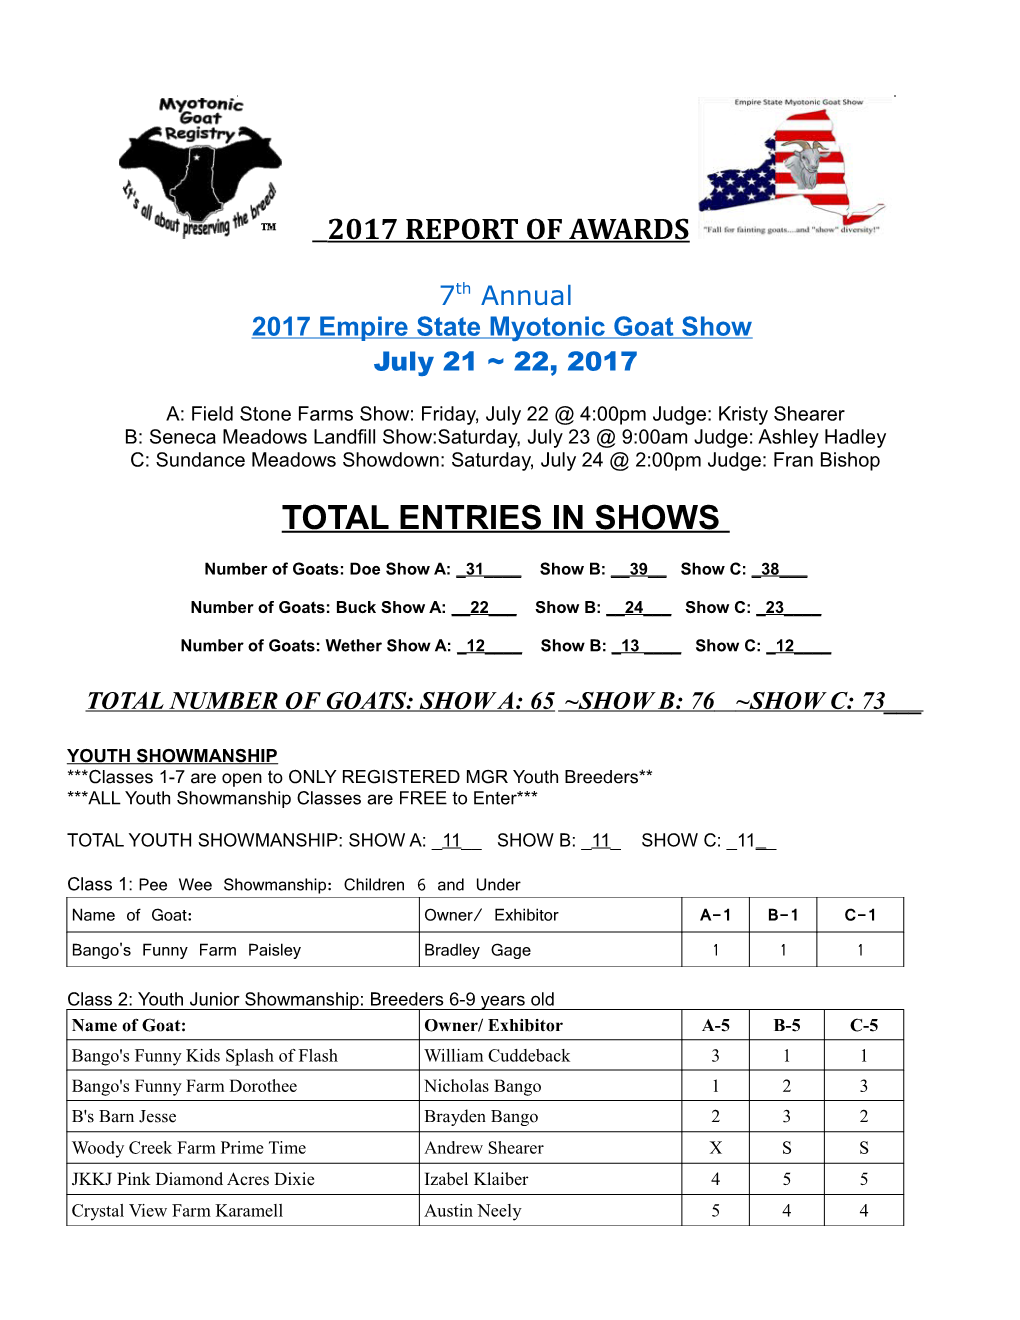 2017 Empire State Myotonic Goat Show